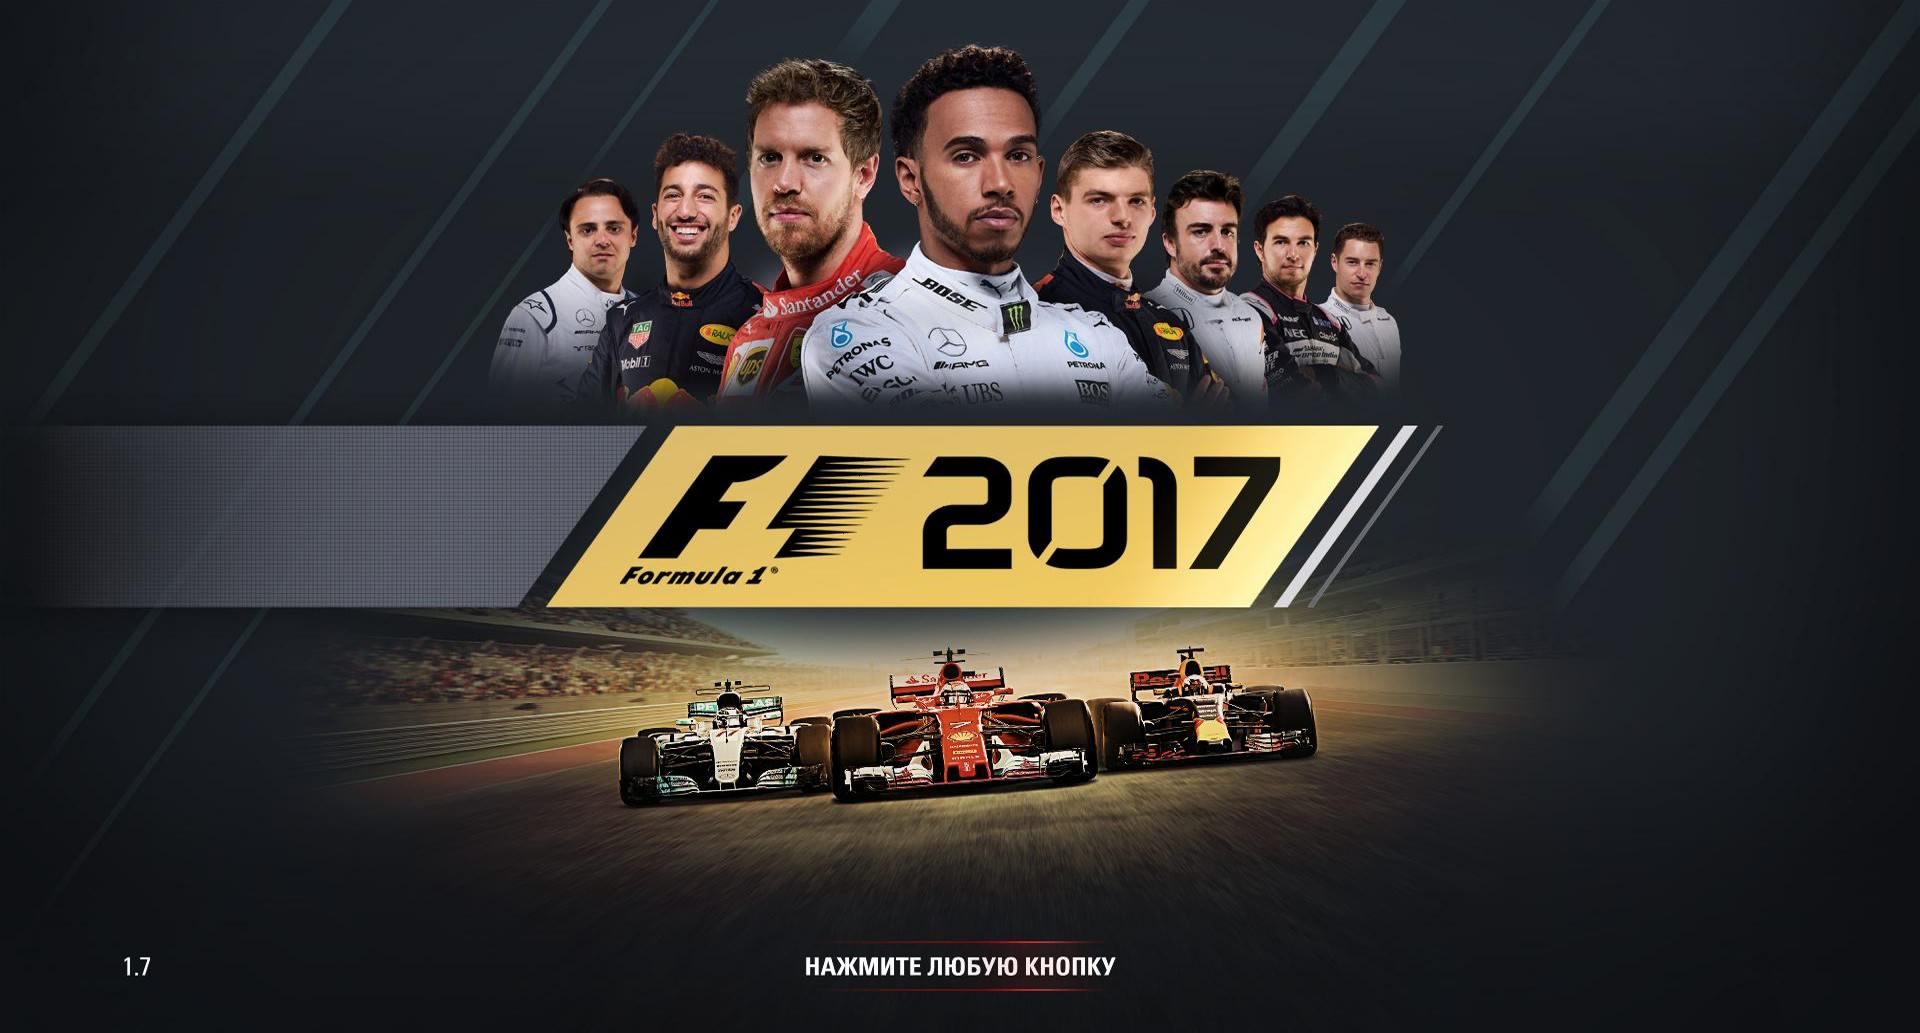 Ф1 2017 игра. F1 2017 EA Sports. Формула 1 2017. F1 2017 обложка.